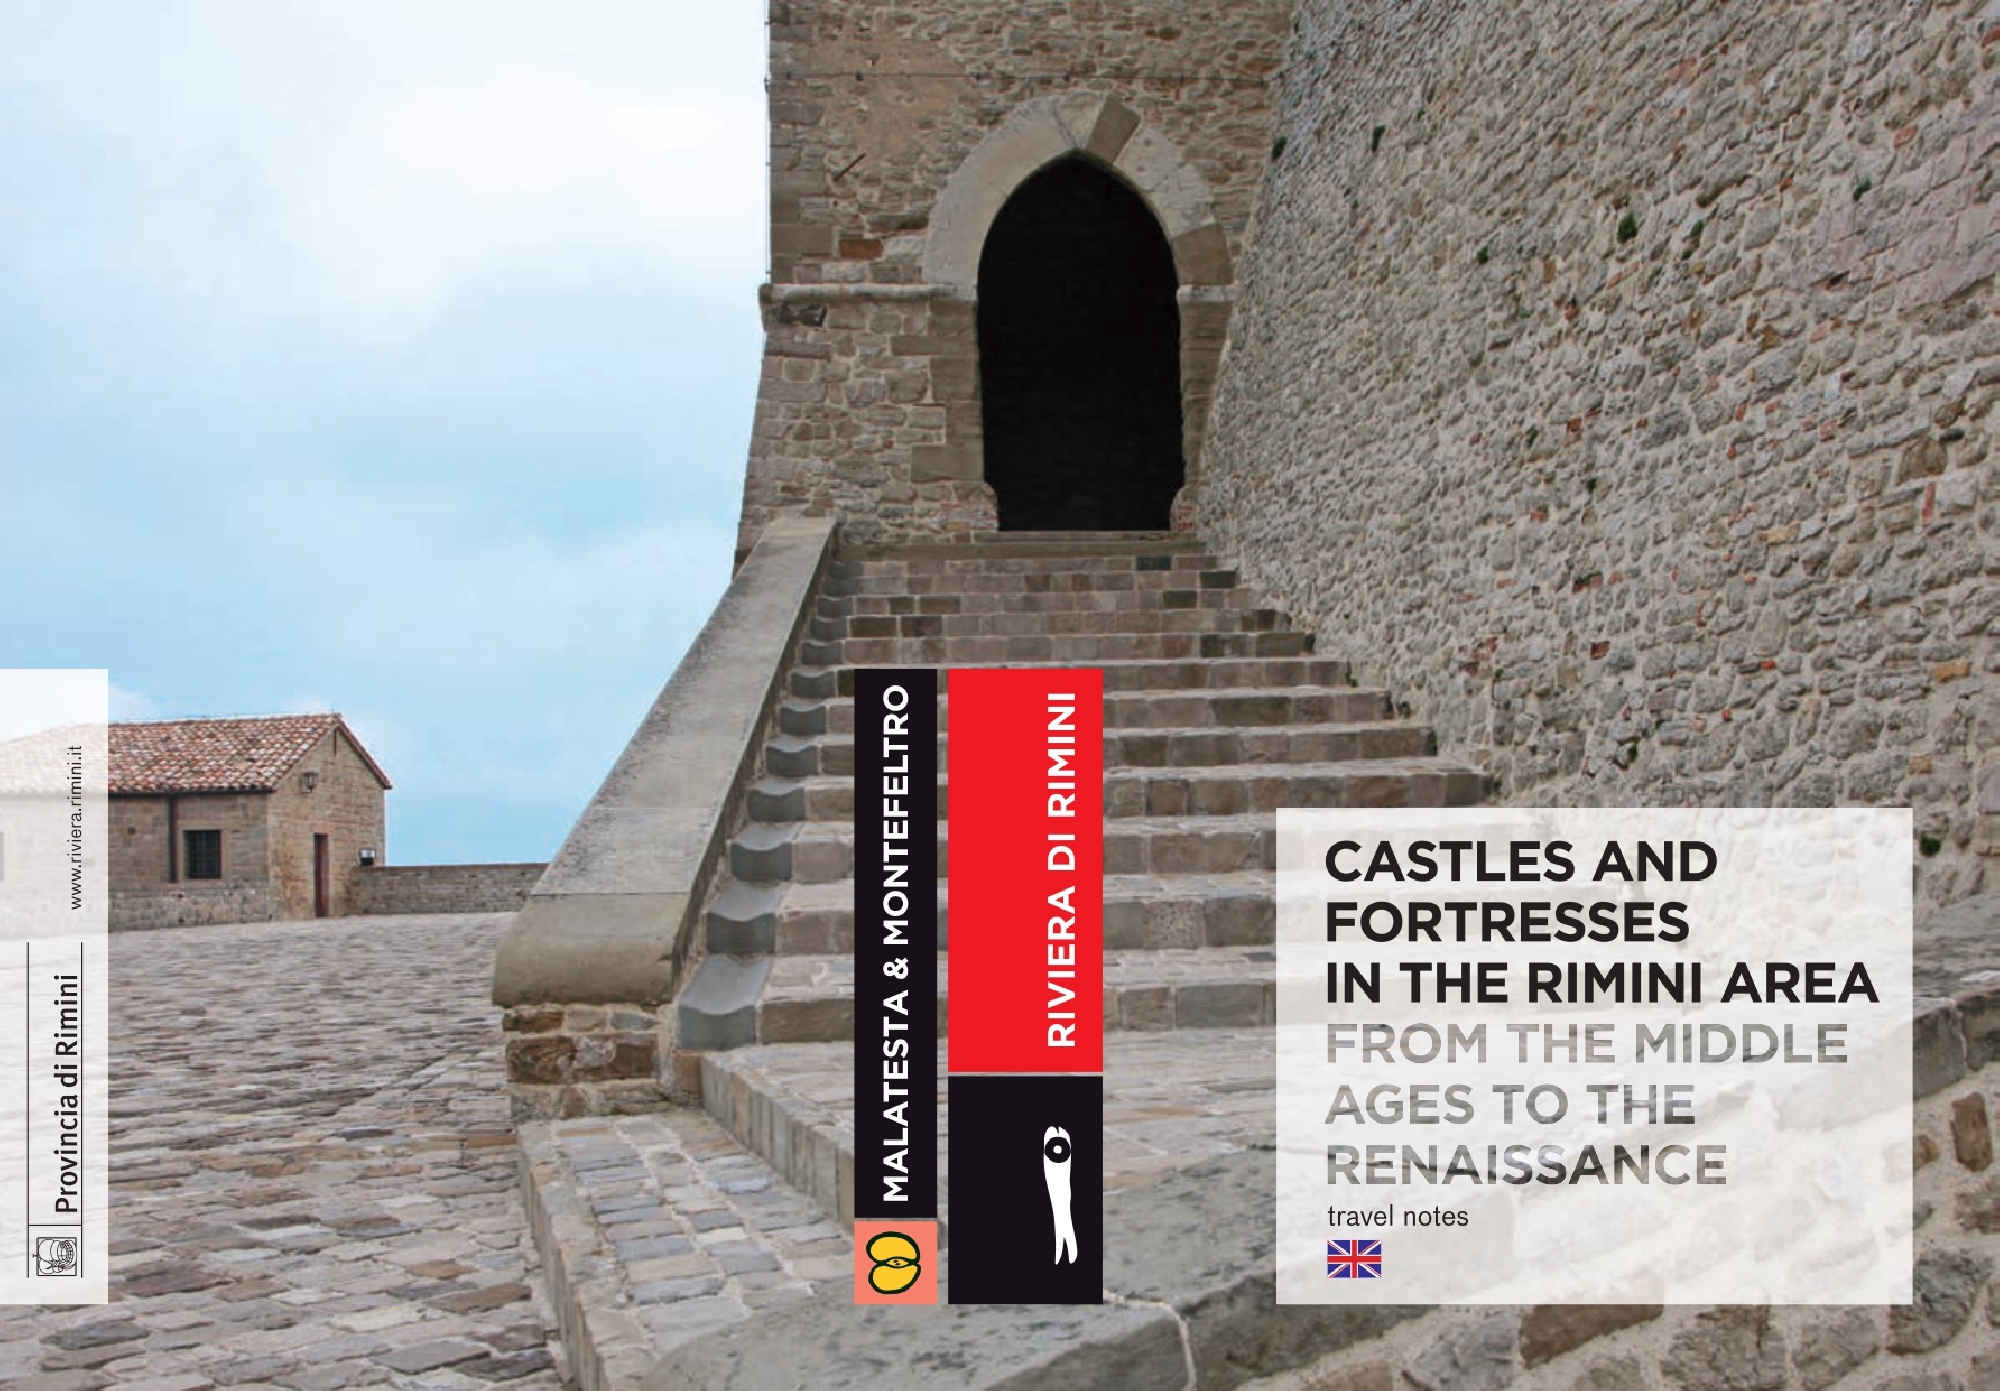 PDF: Castles and fortresses in the Rimini area EN 6.41M